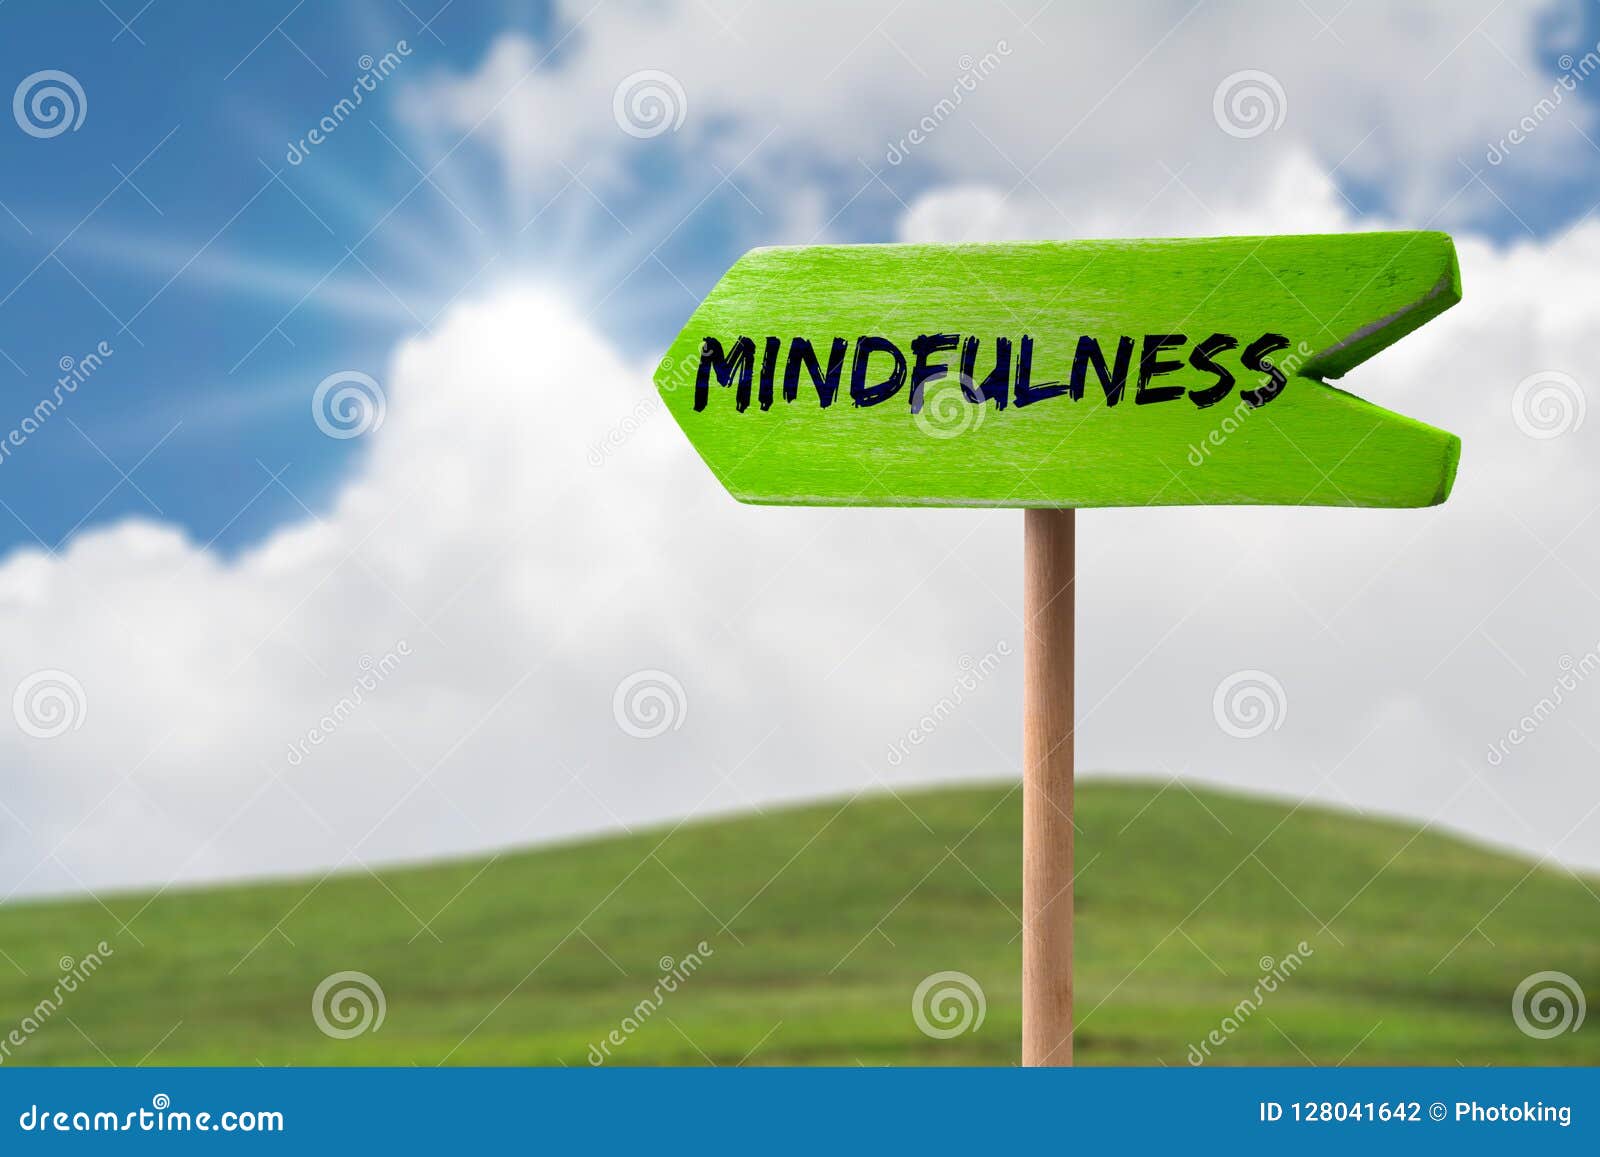 mindfulness arrow sign